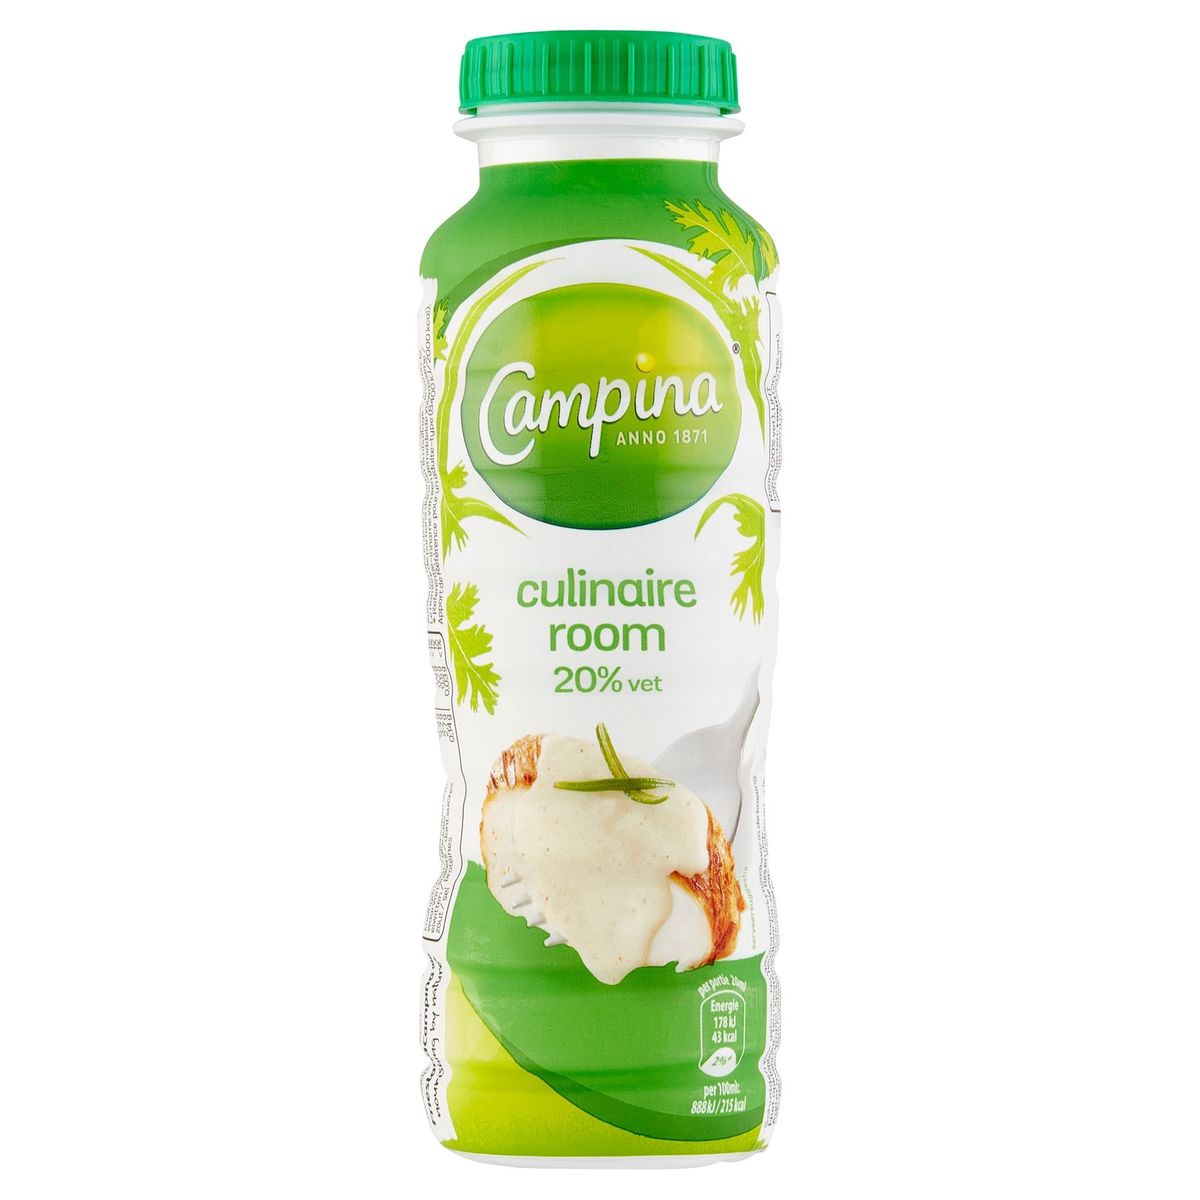 Campina Crème Culinaire 20% M.G. 250 ml